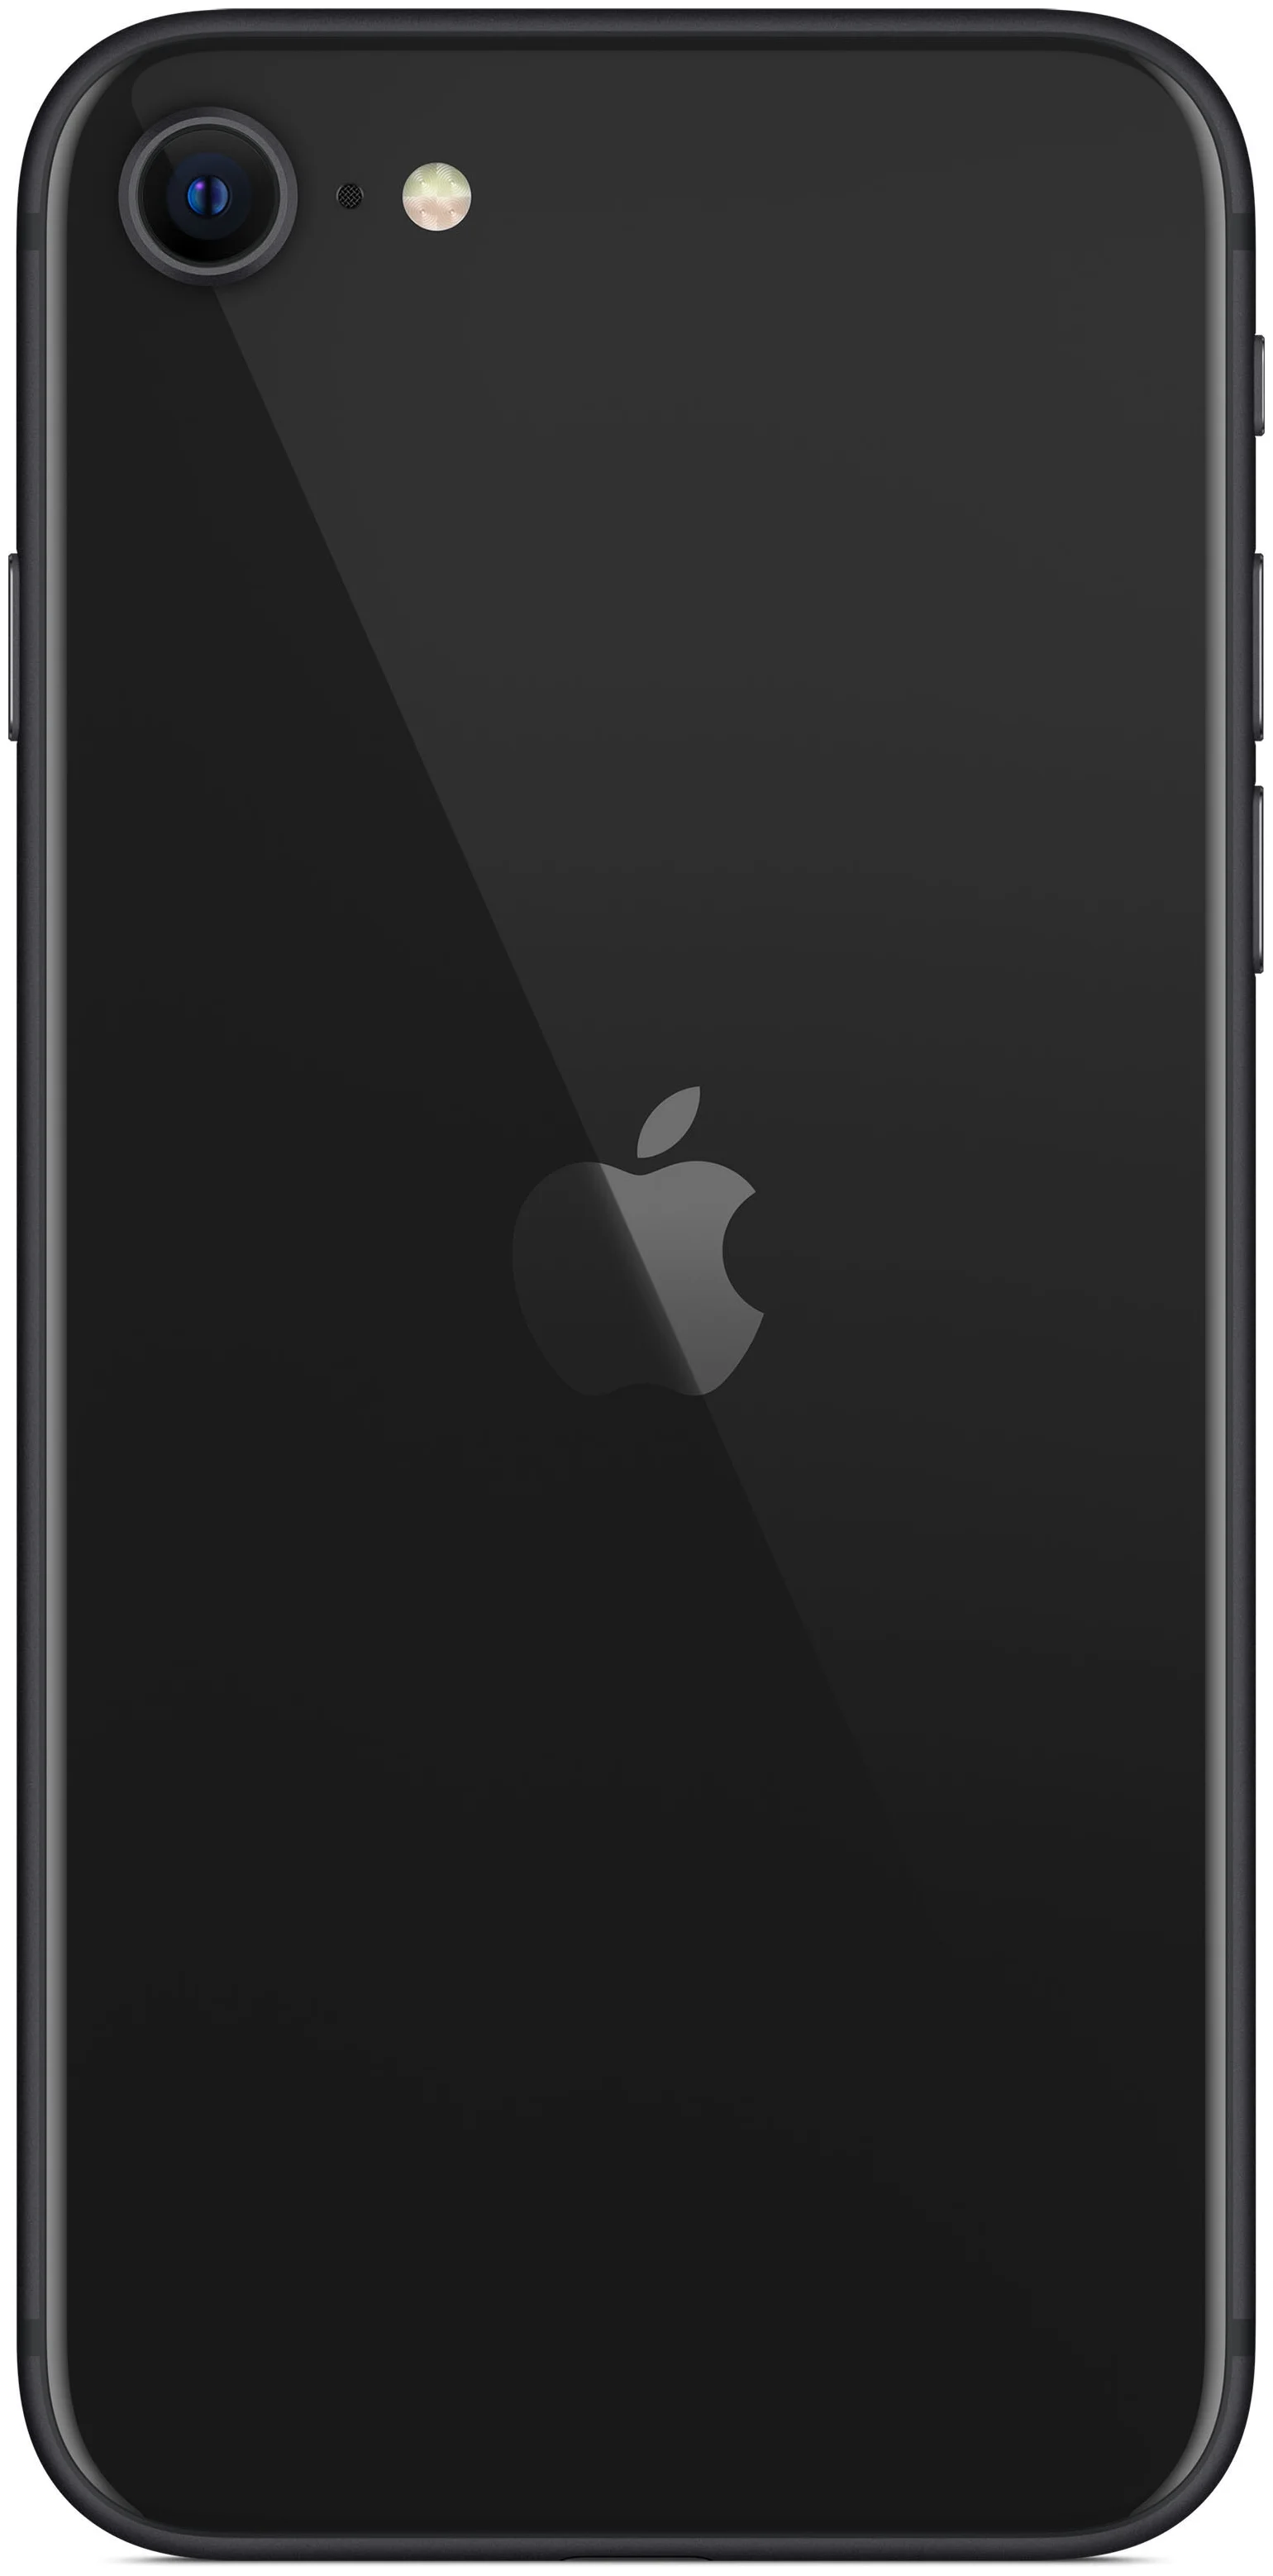 Apple iPhone SE 2020 128GB - операционная система: iOS 13